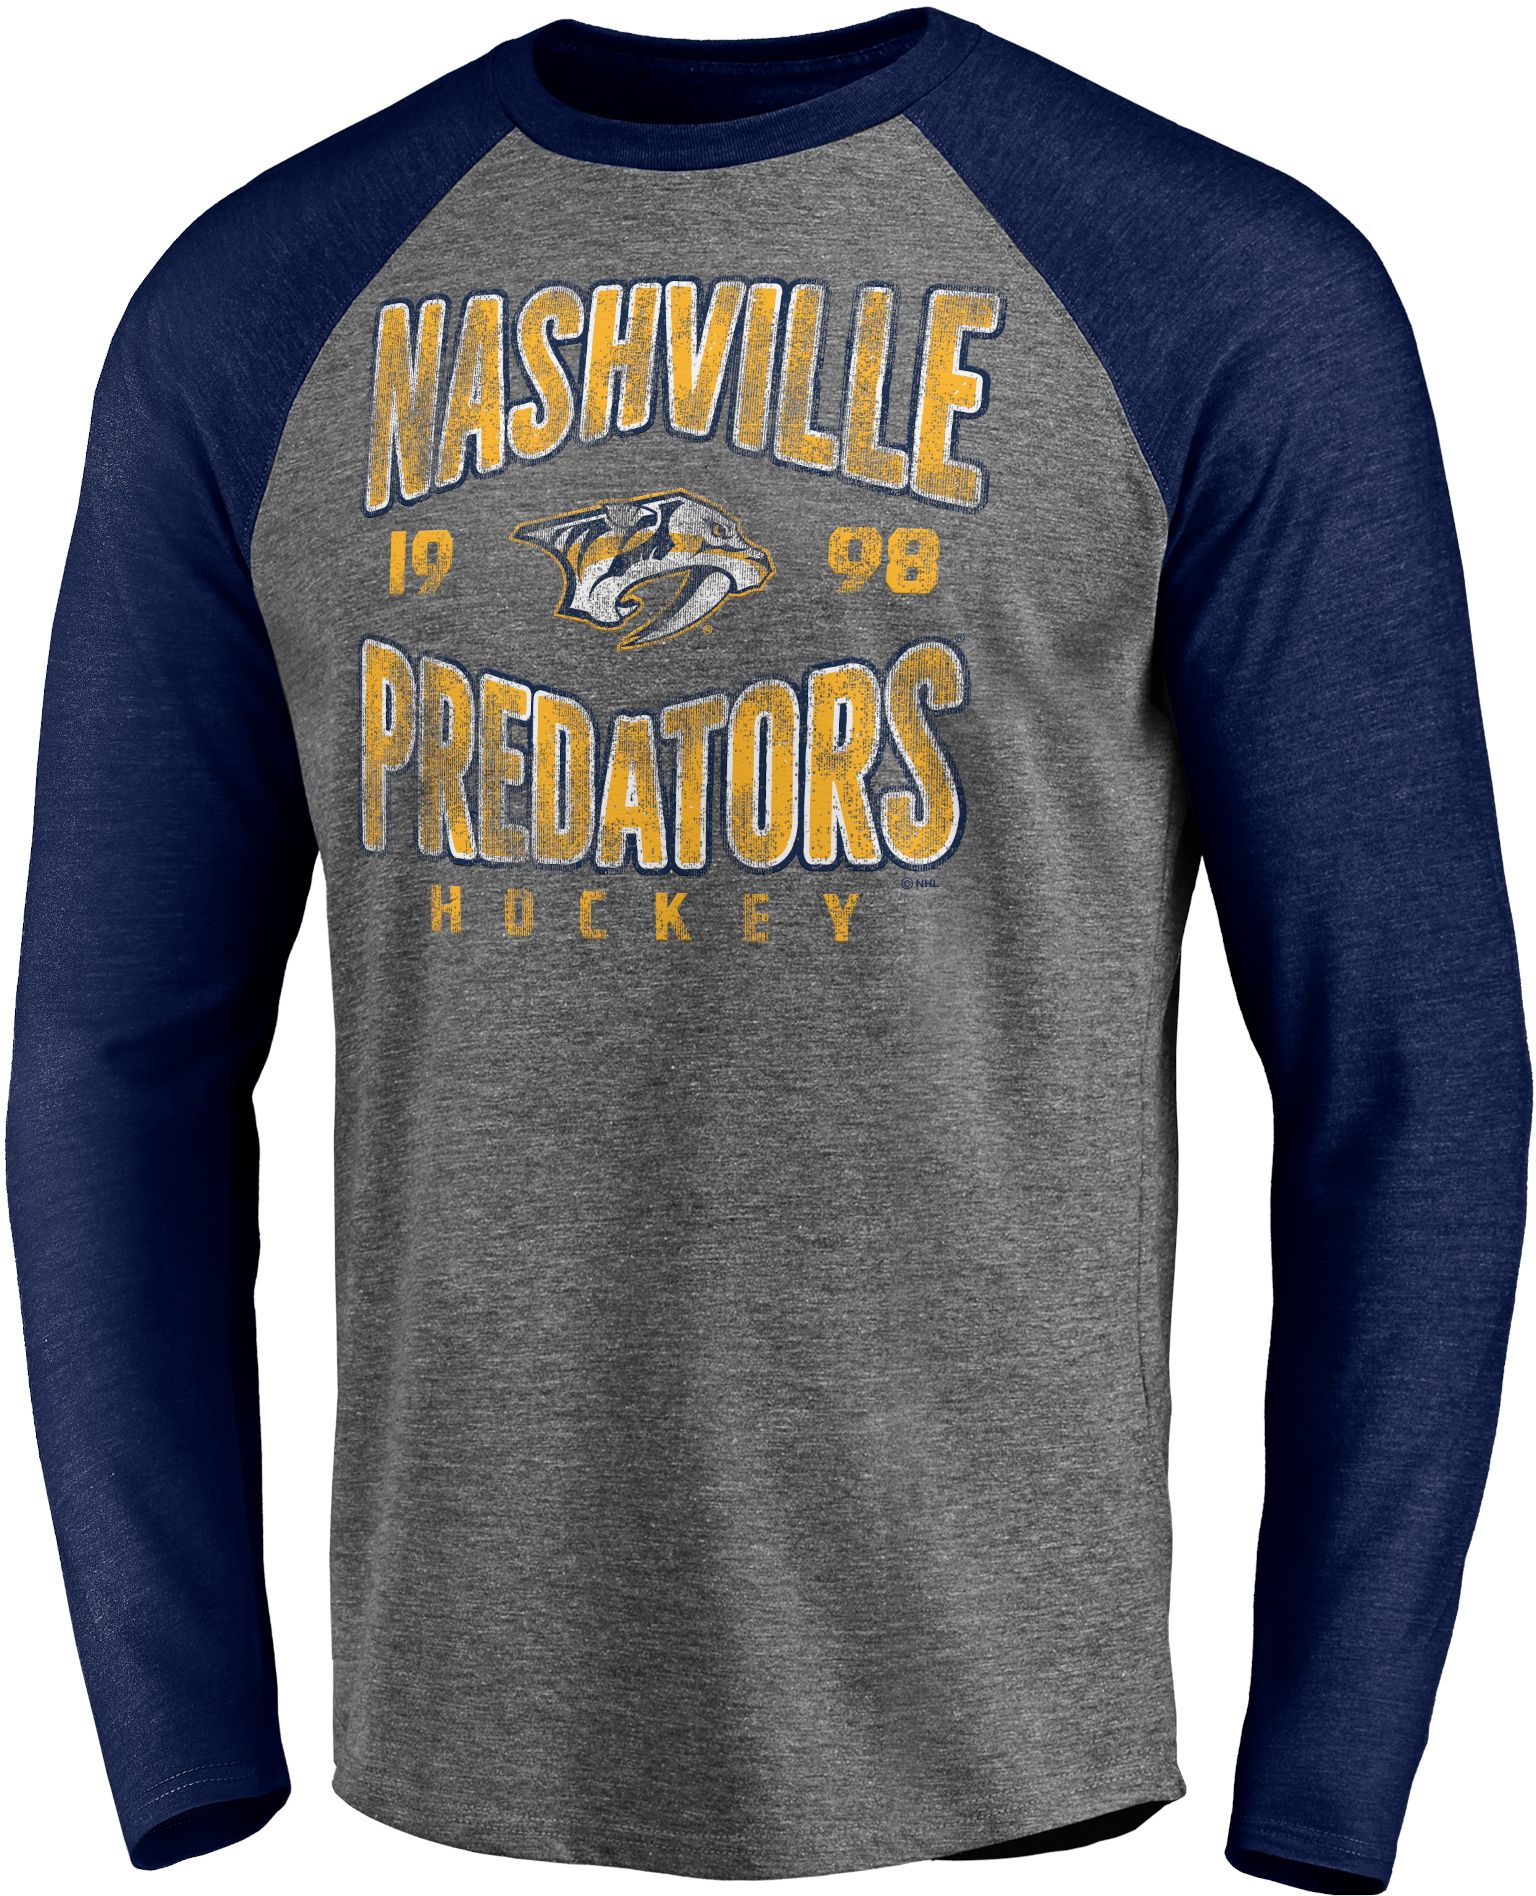 Nashville Predators Men's Polo Shirts - NHL Pro Shop